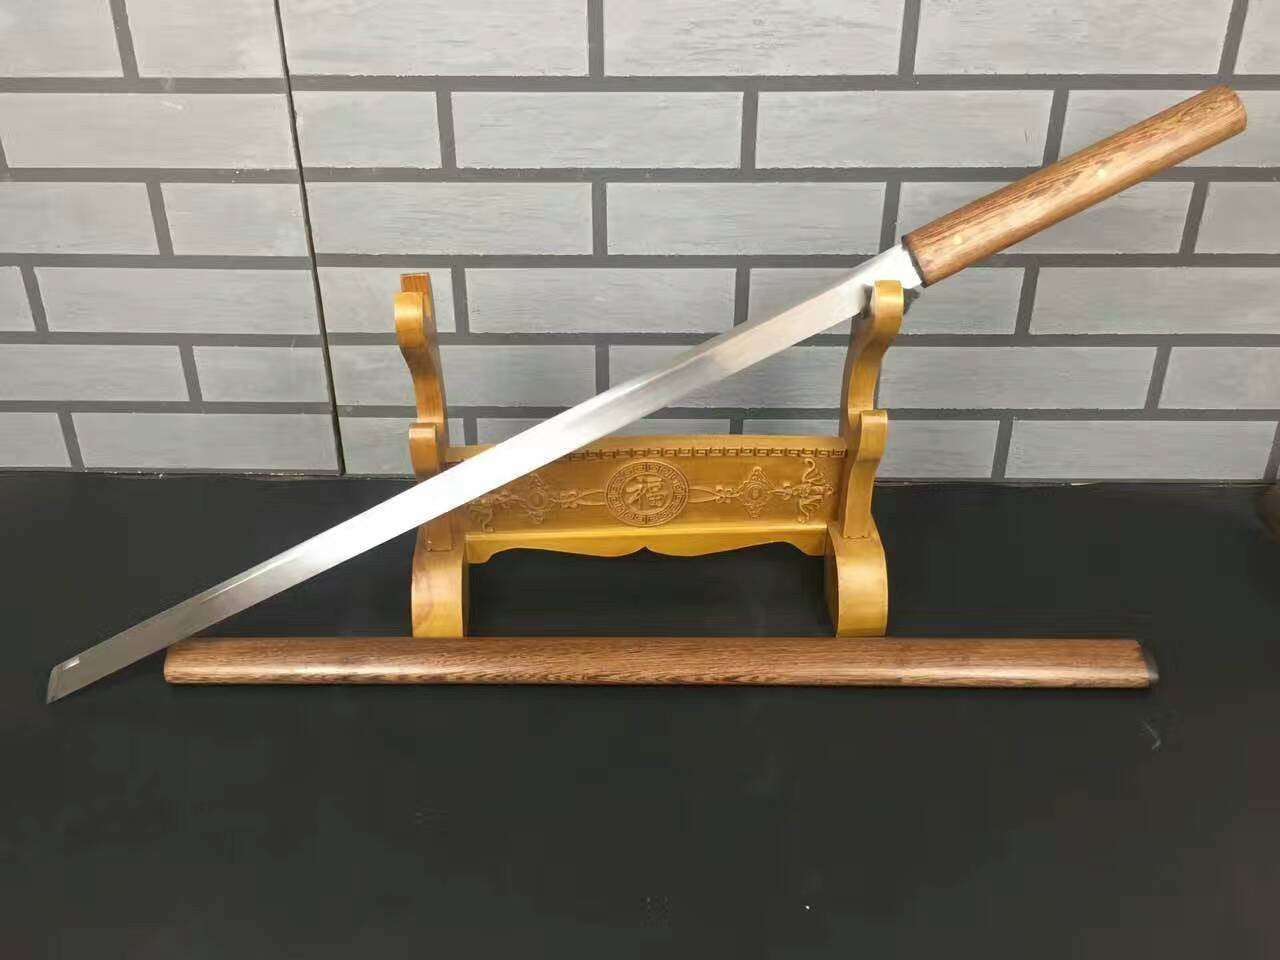 Tang dao(High manganese steel,Rosewood scabbard)Full tang,Length 39" - Chinese sword shop